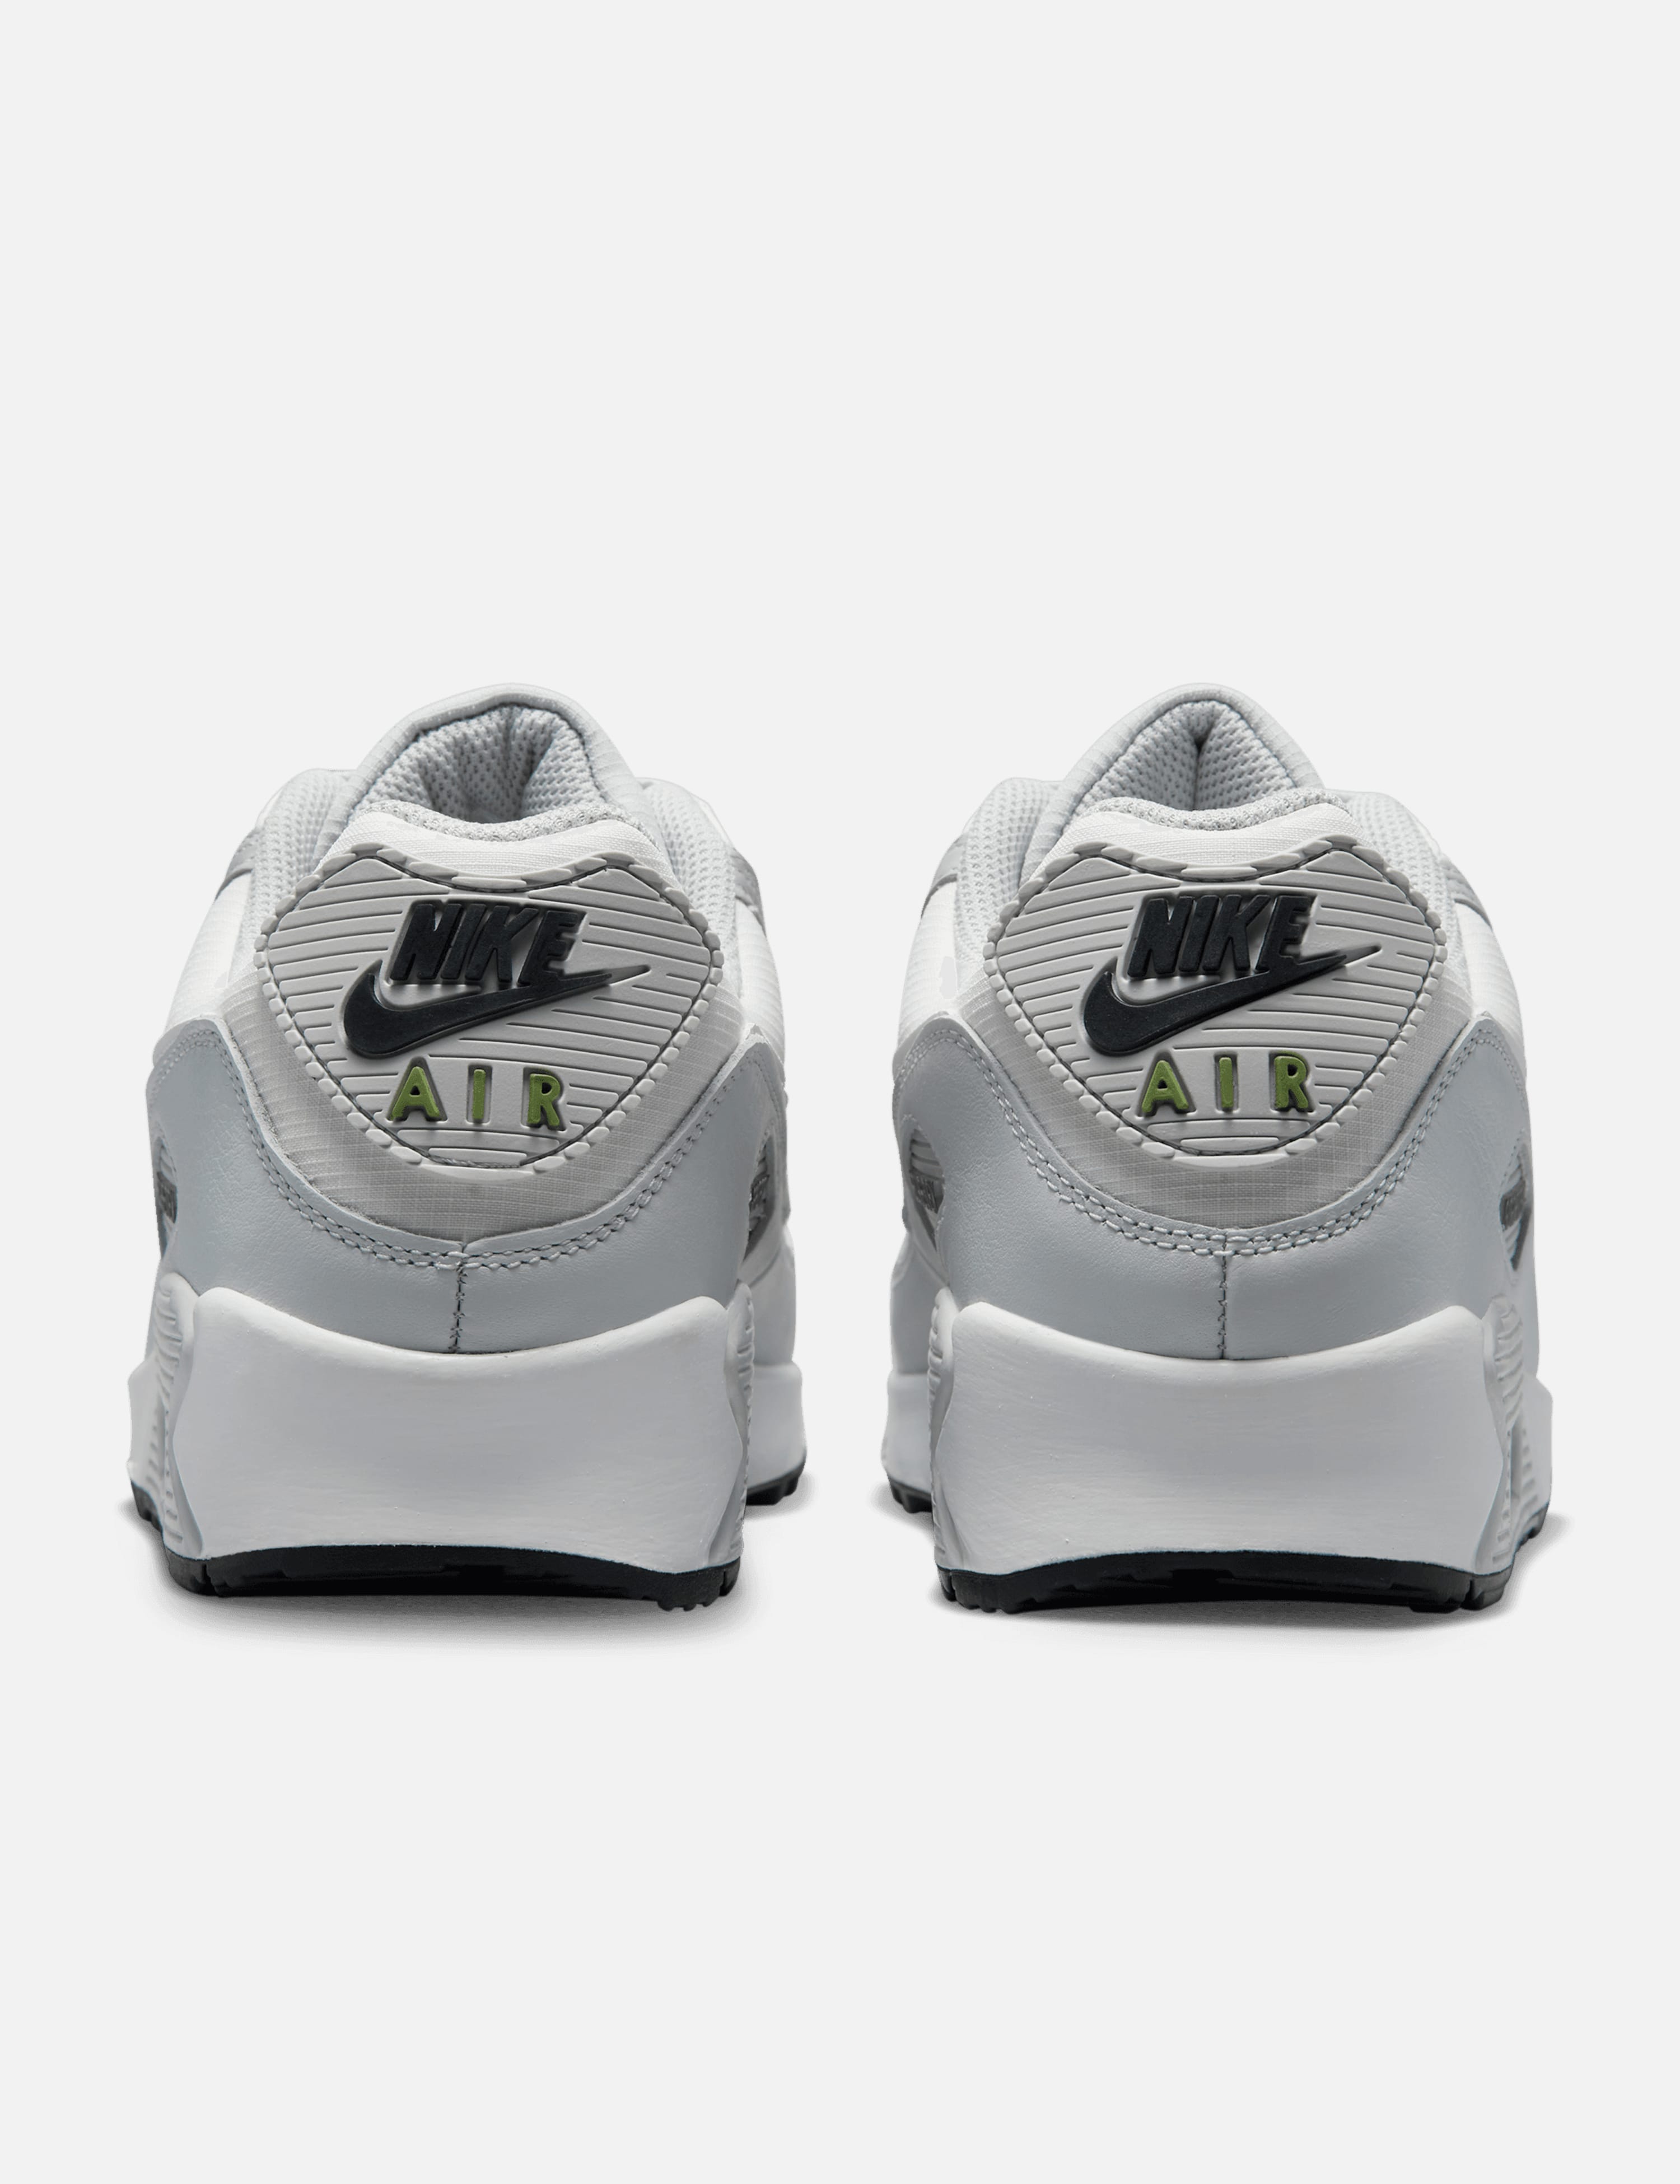 Nike - Nike Air Max 90 GTX | HBX - Globally Curated Fashion and